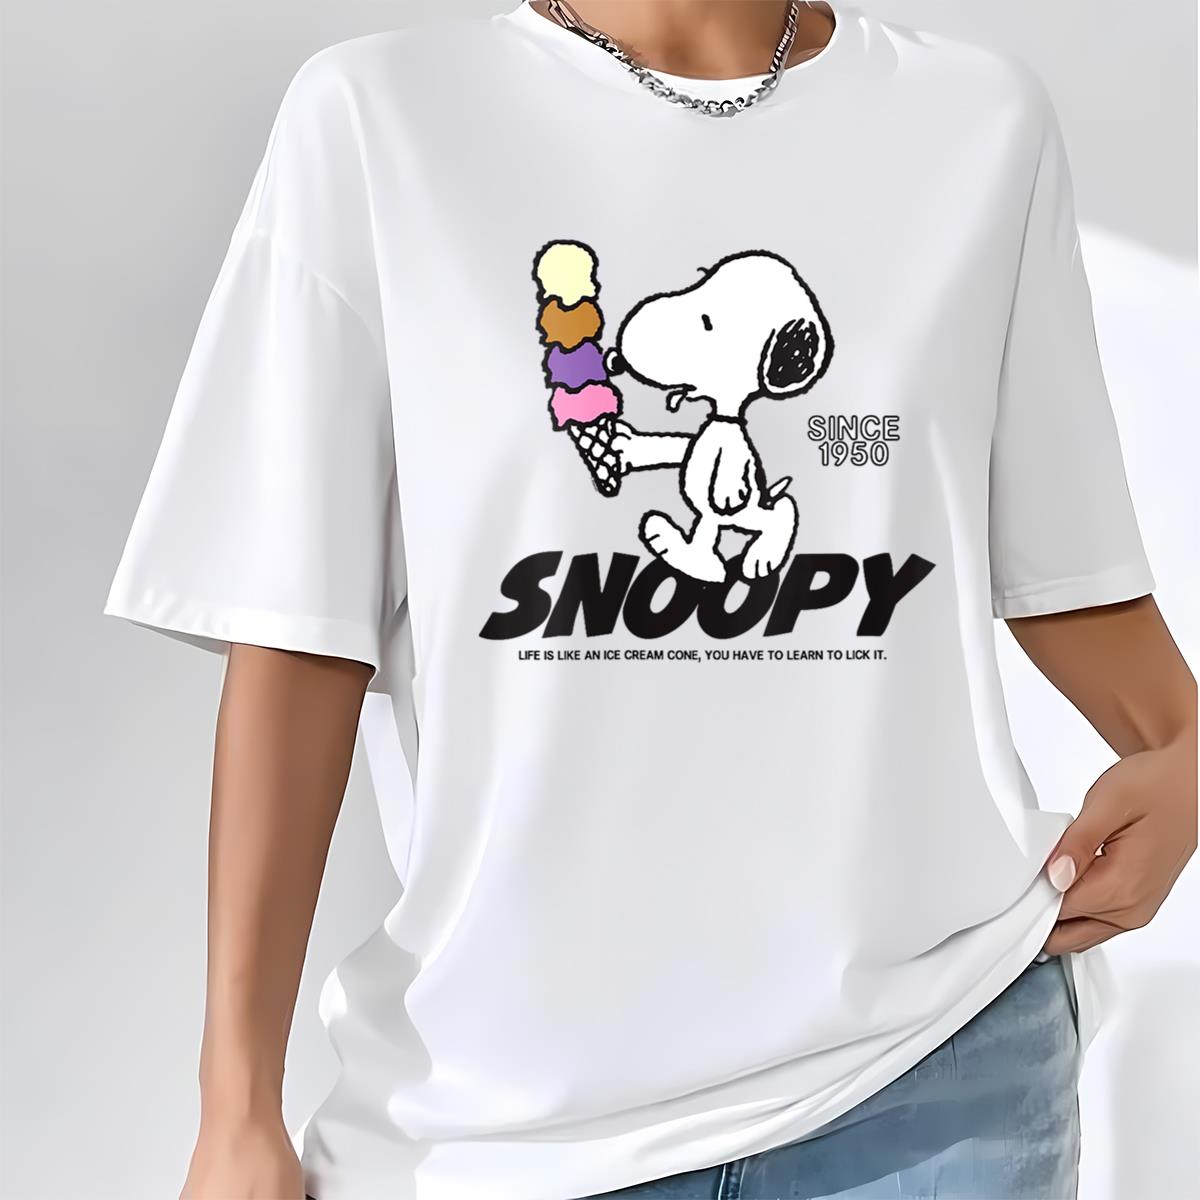 snoopy ice cream t shirt peanuts character shirt 5df28